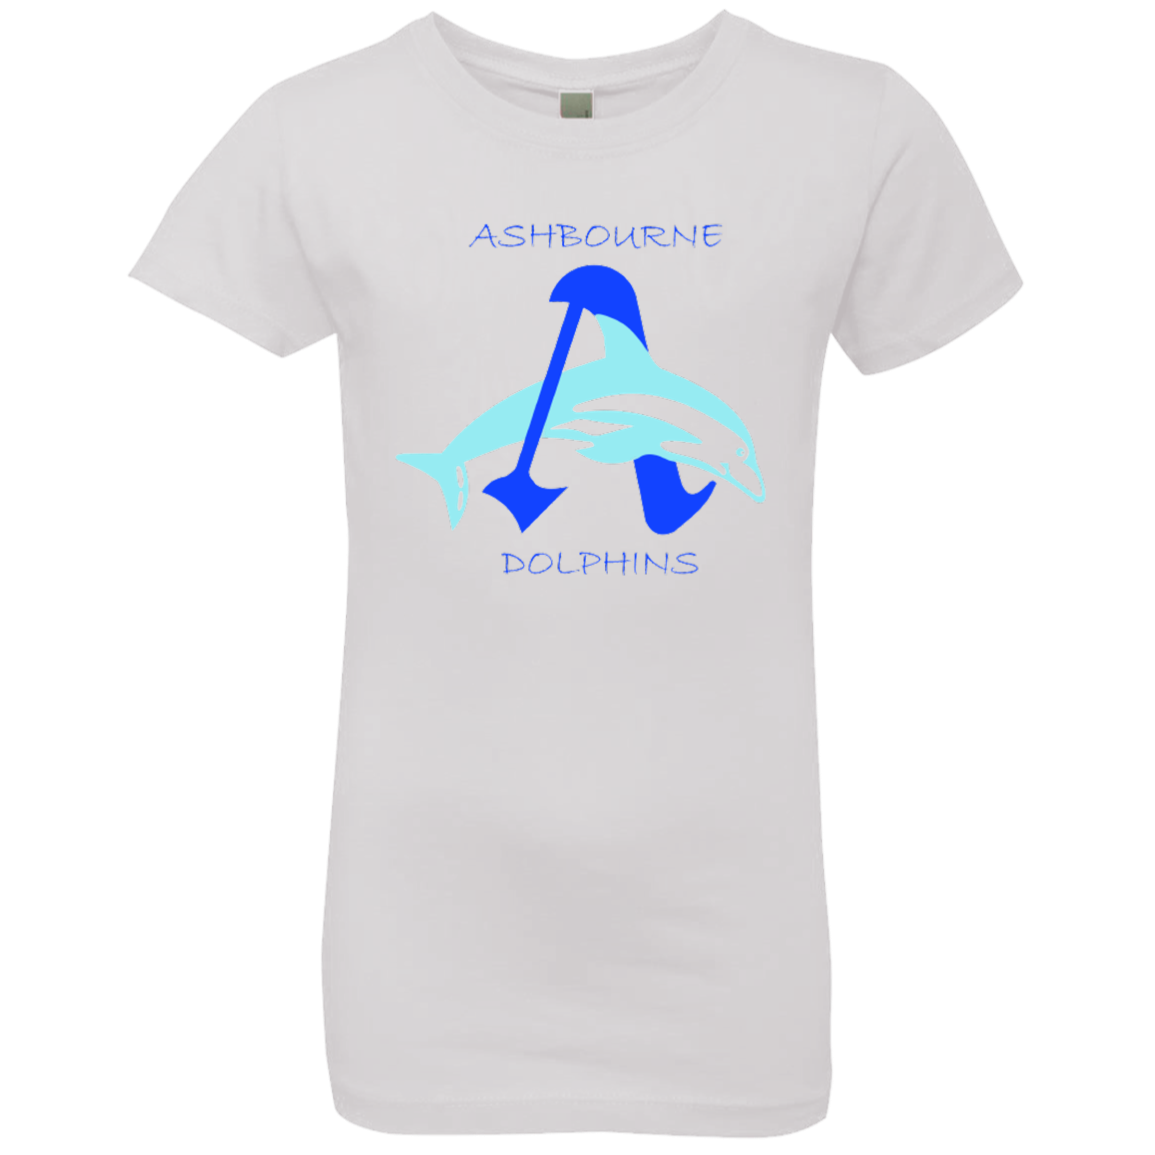 Ashbourne TeamStore Girls' Princess T-Shirt